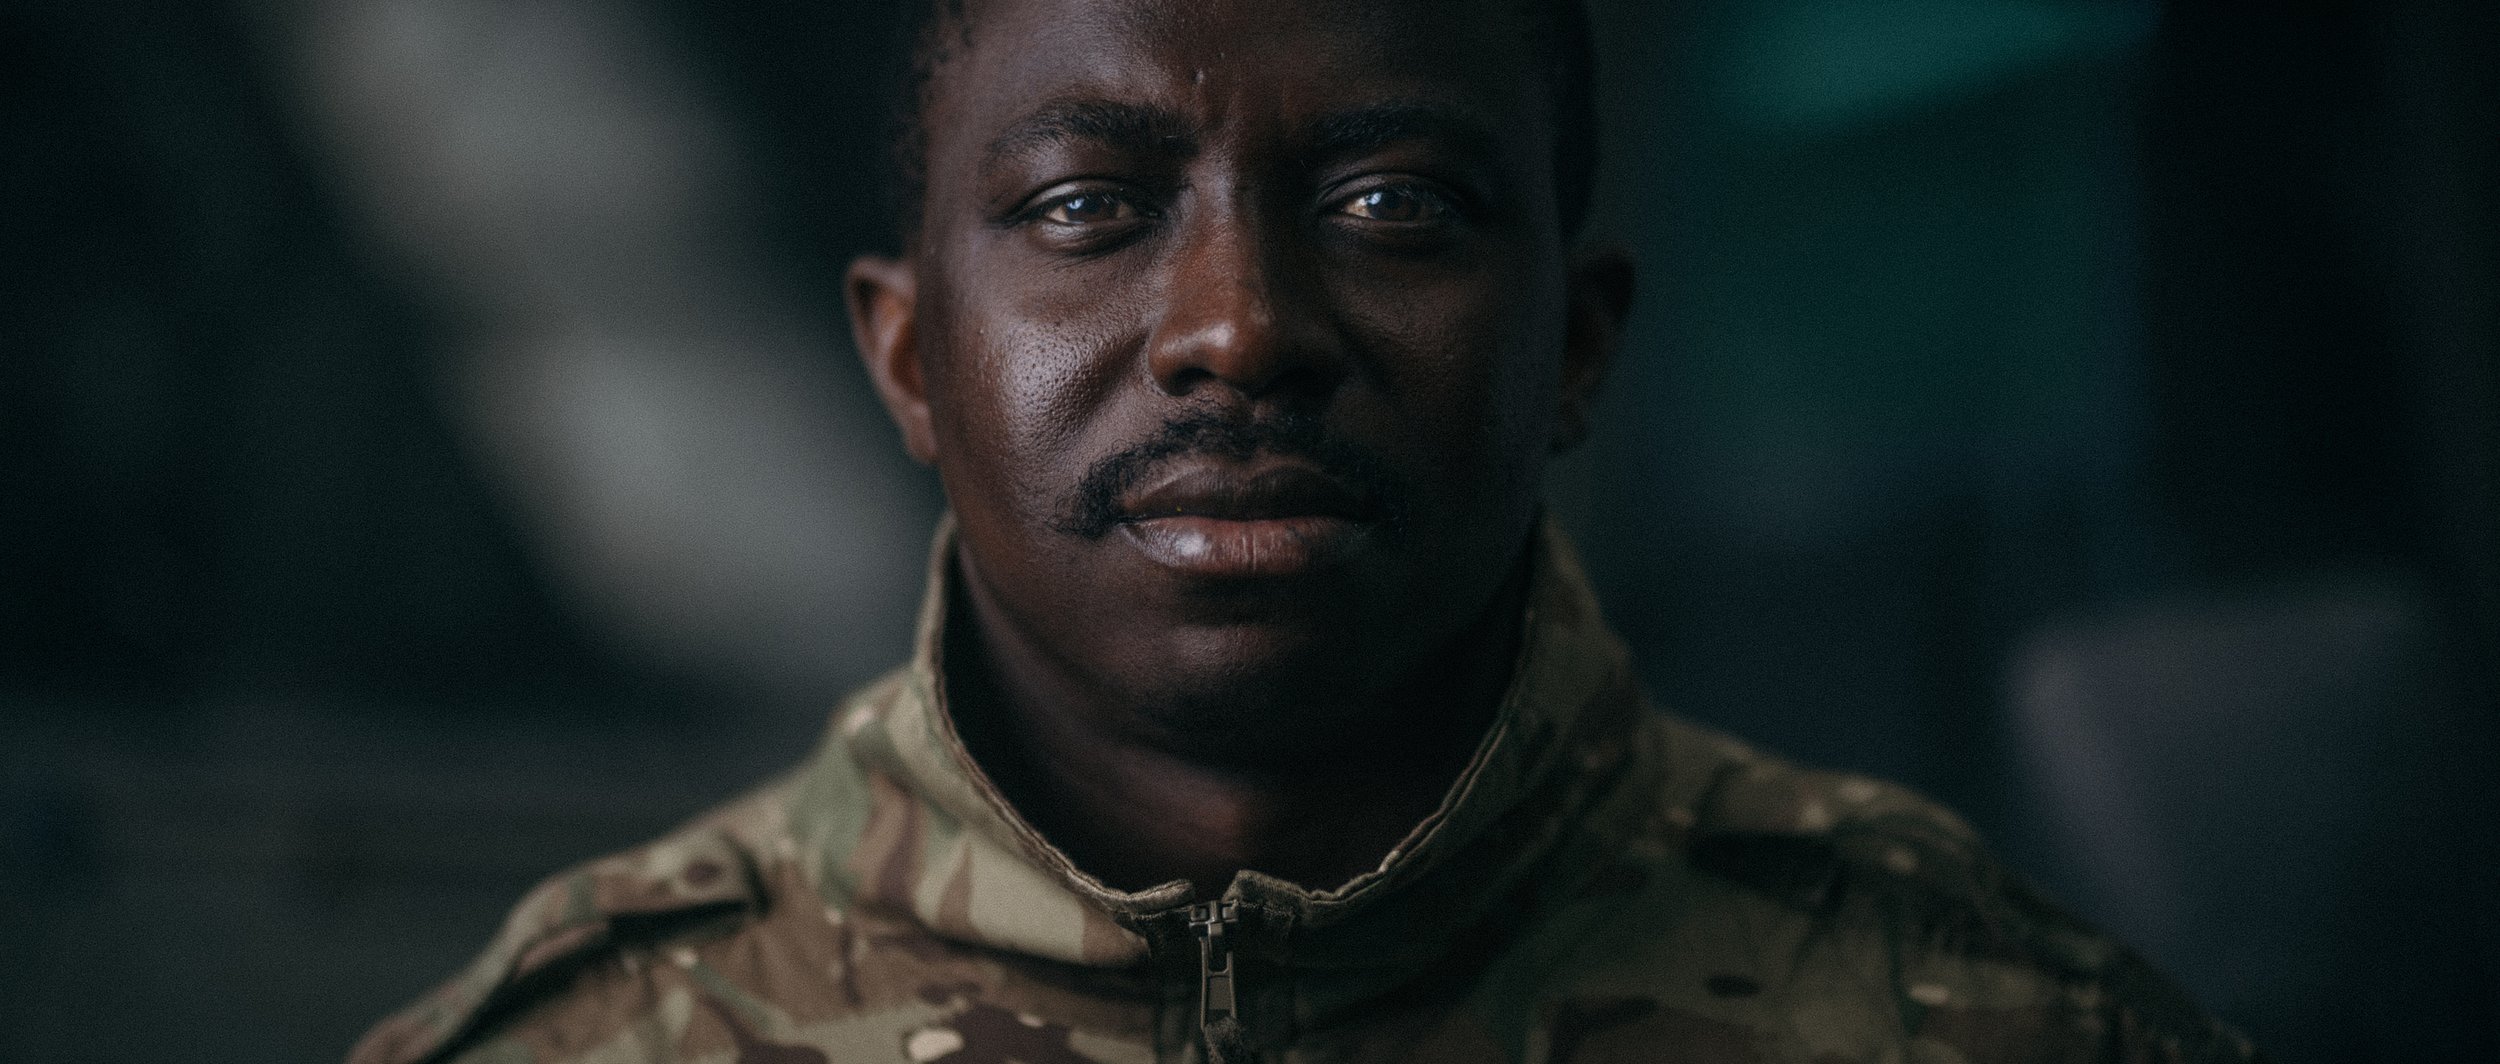 Army Portraits-8.jpg